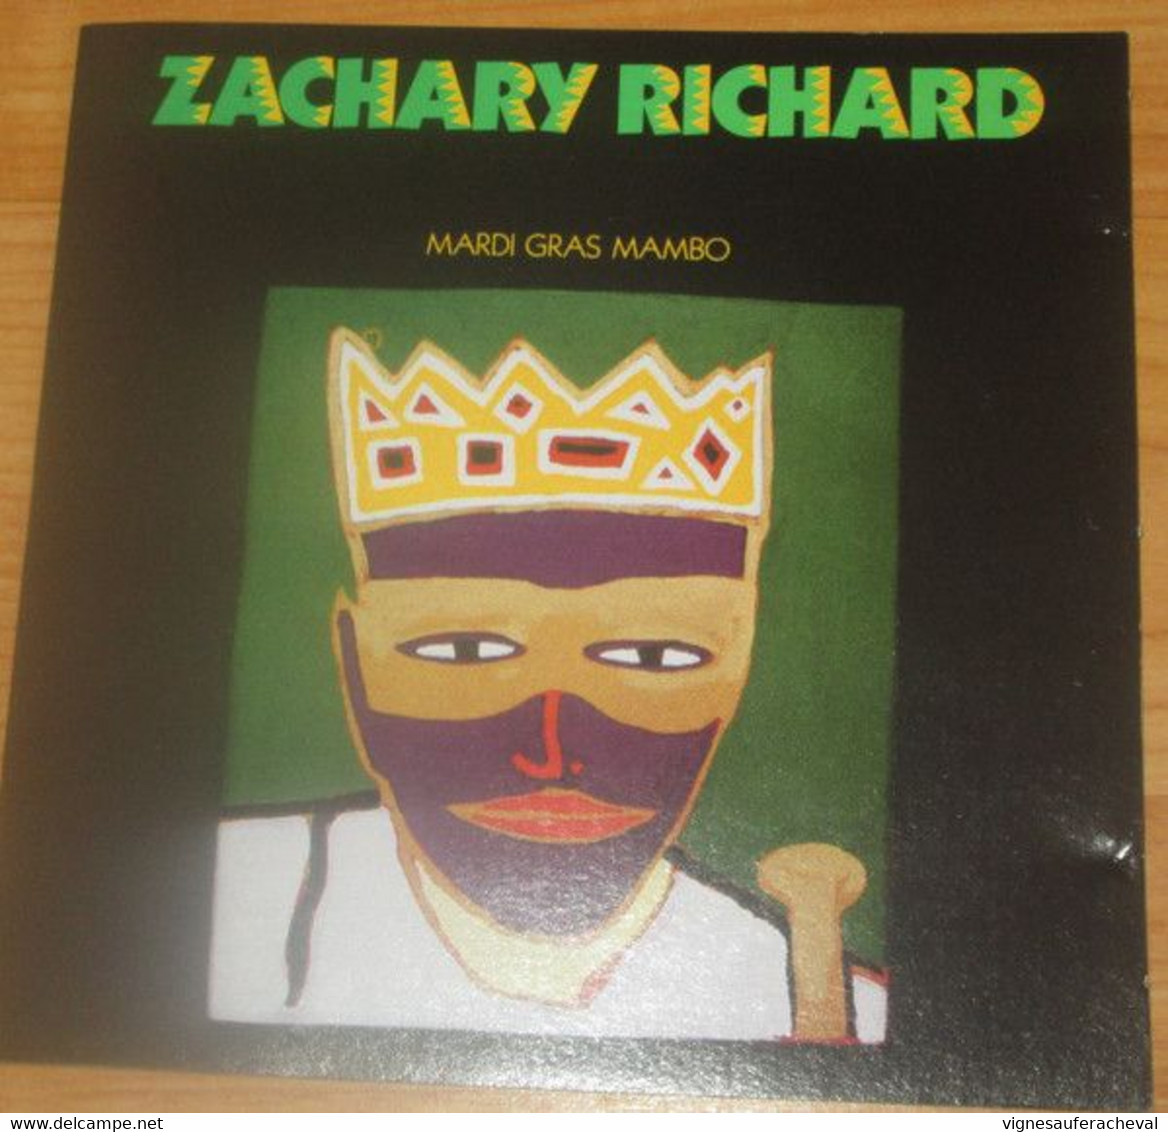 Zachary Richard - Mardi Gras Mambo - Other - English Music